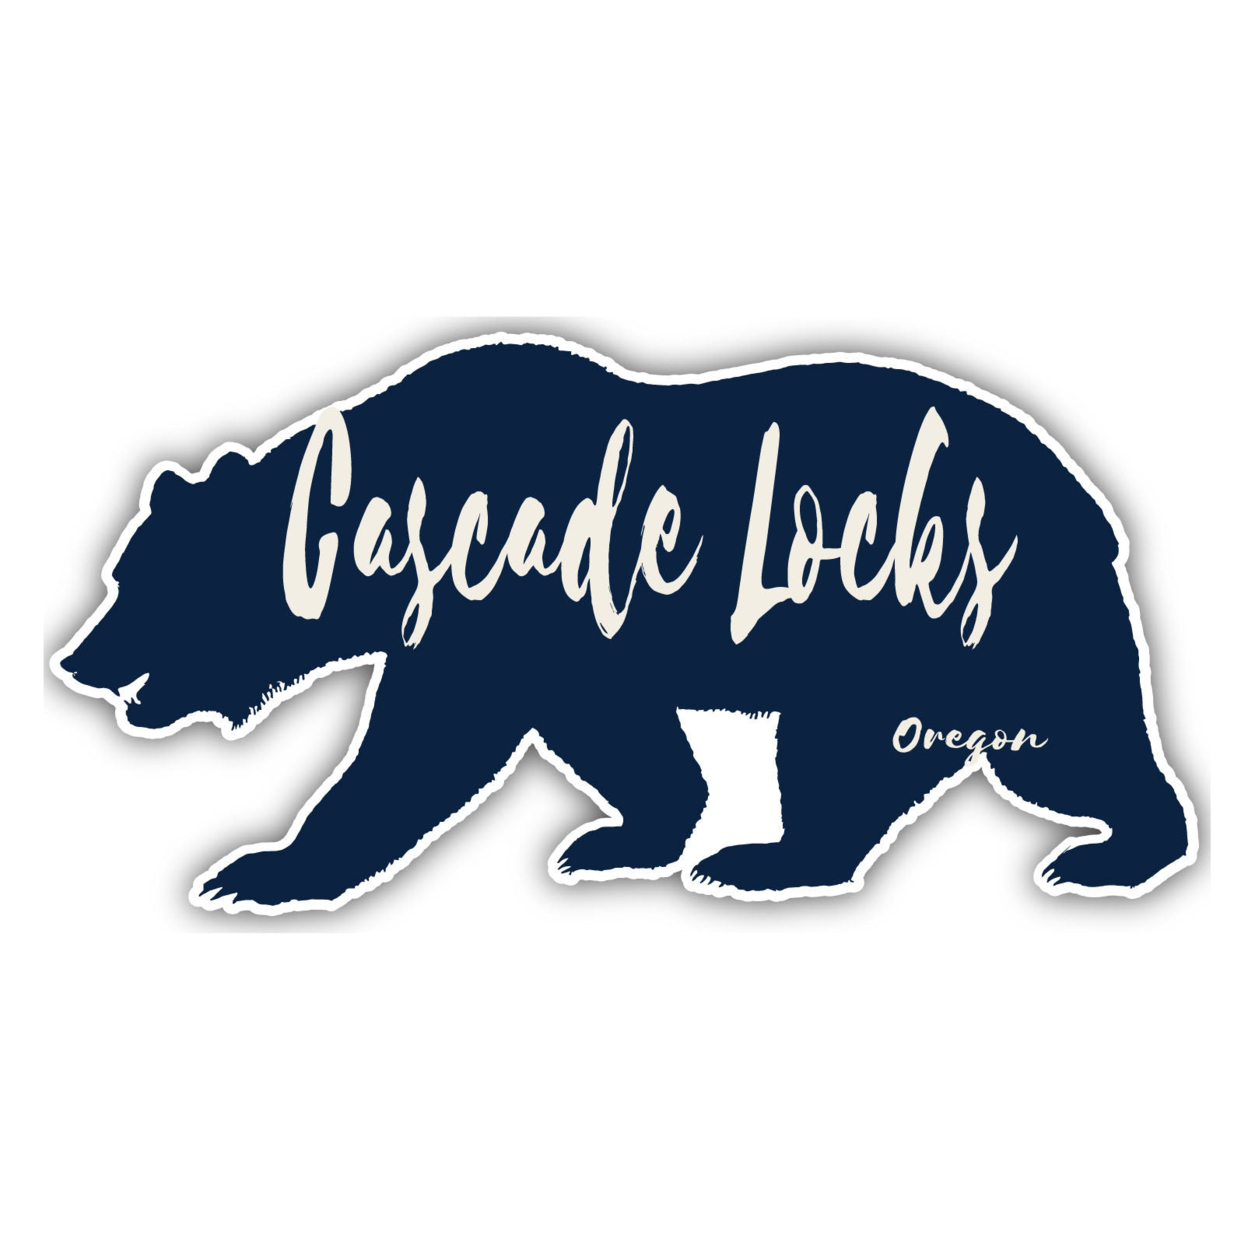 Cascade Locks Oregon Souvenir Decorative Stickers (Choose Theme And Size) - Single Unit, 12-Inch, Tent